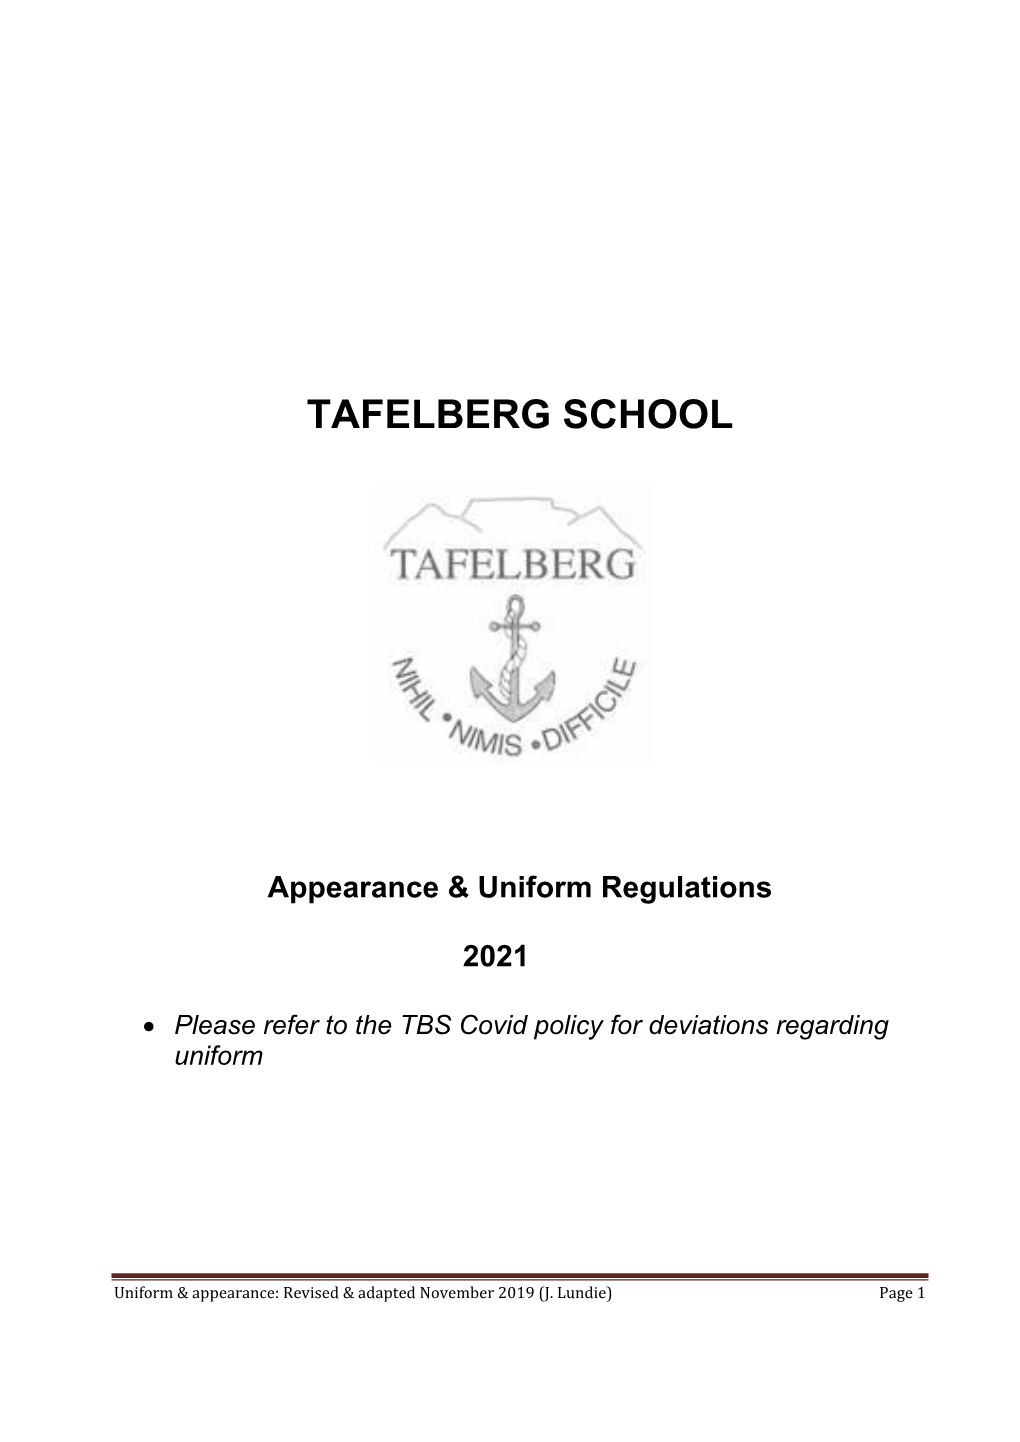 TAFELBERG SCHOOL Appearance & Uniform Regulations 2021